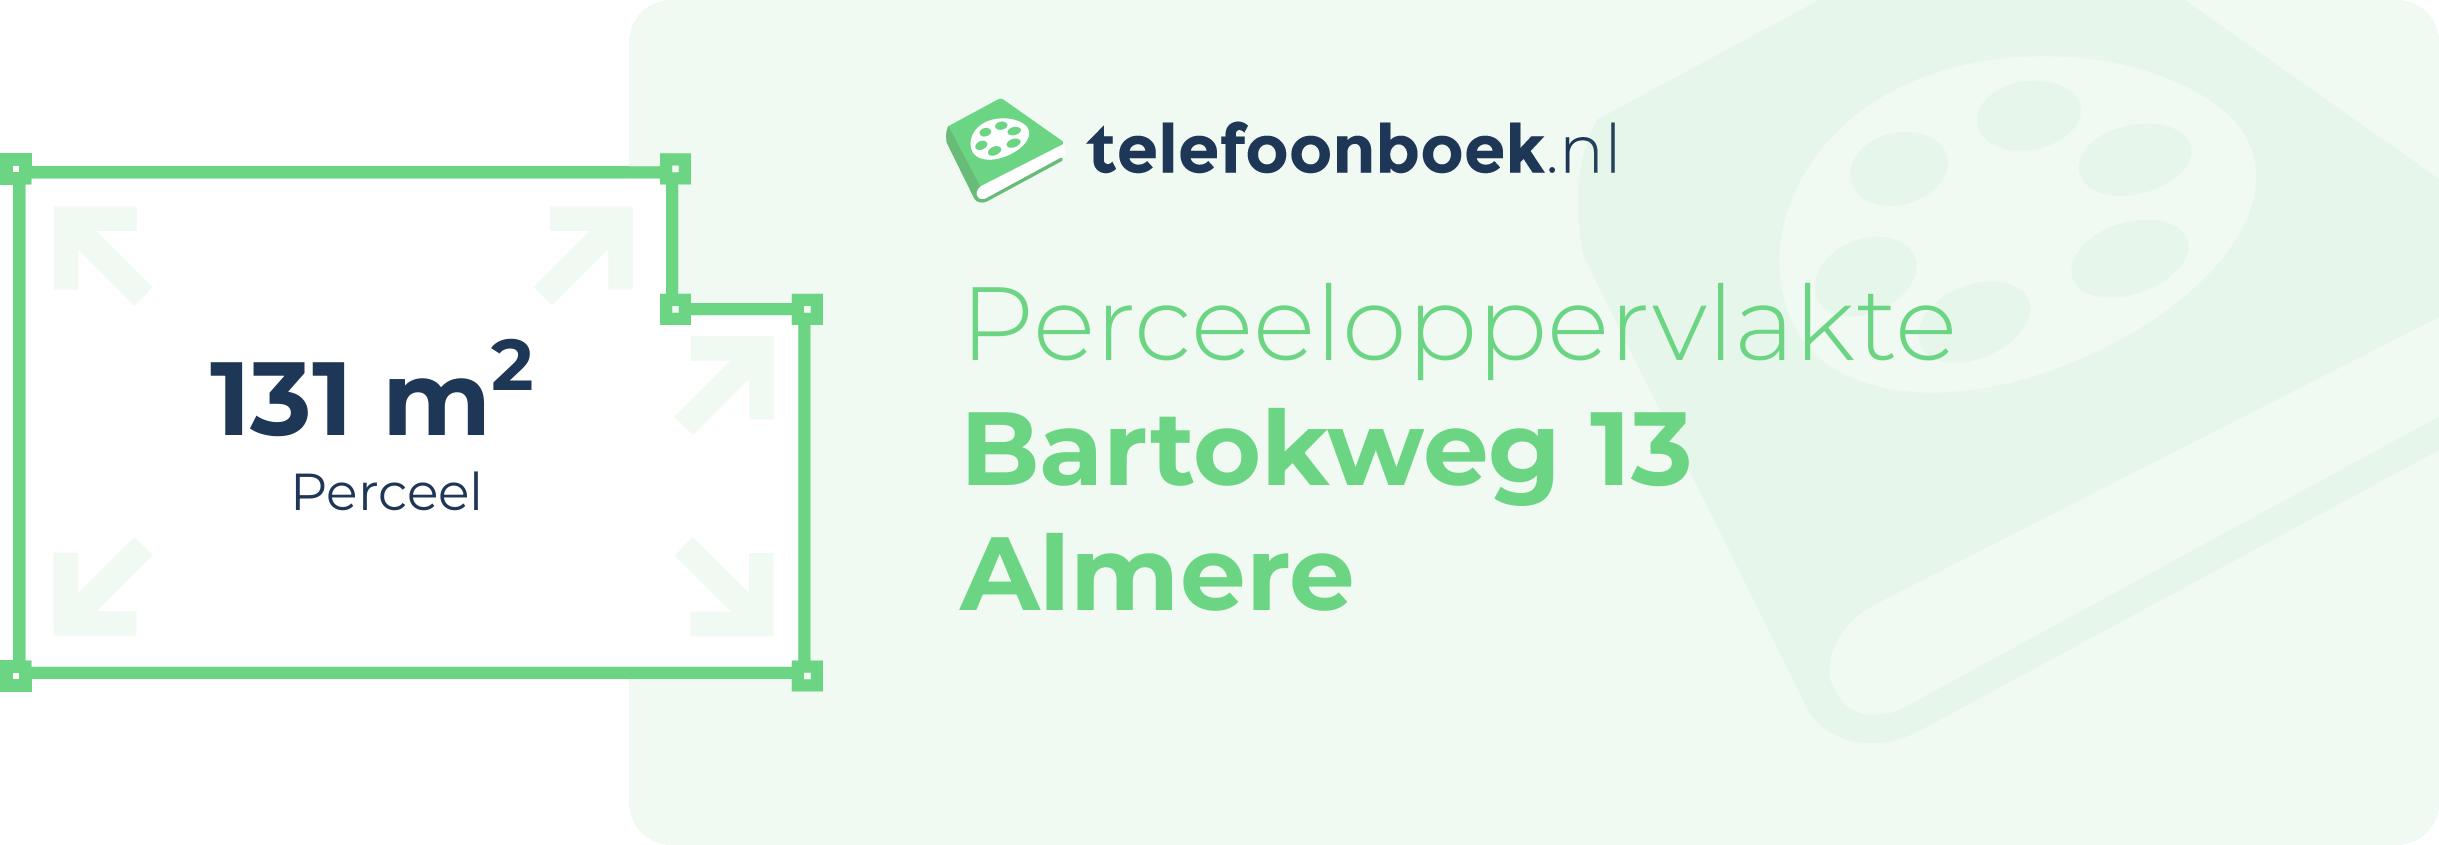 Perceeloppervlakte Bartokweg 13 Almere